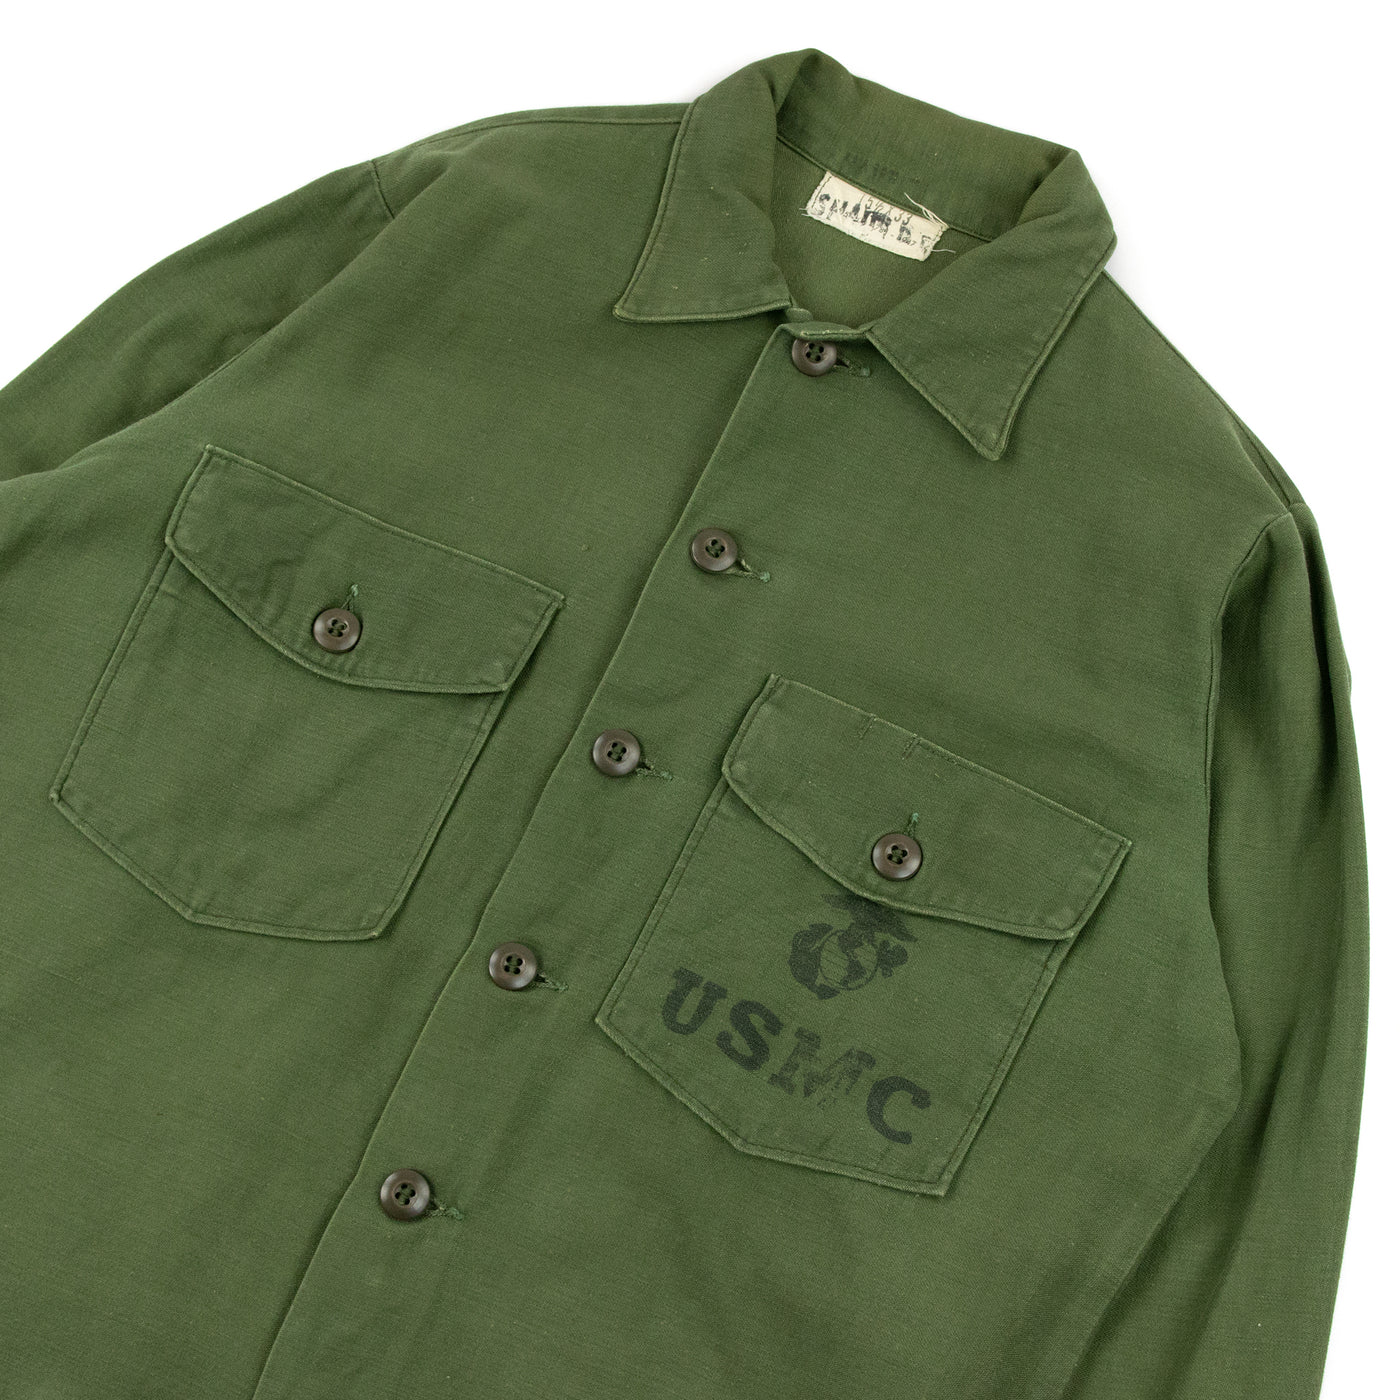 Vintage 60s USMC Vietnam Era Man's Cotton Sateen Army Green 107 Military Shirt S / M CHEST